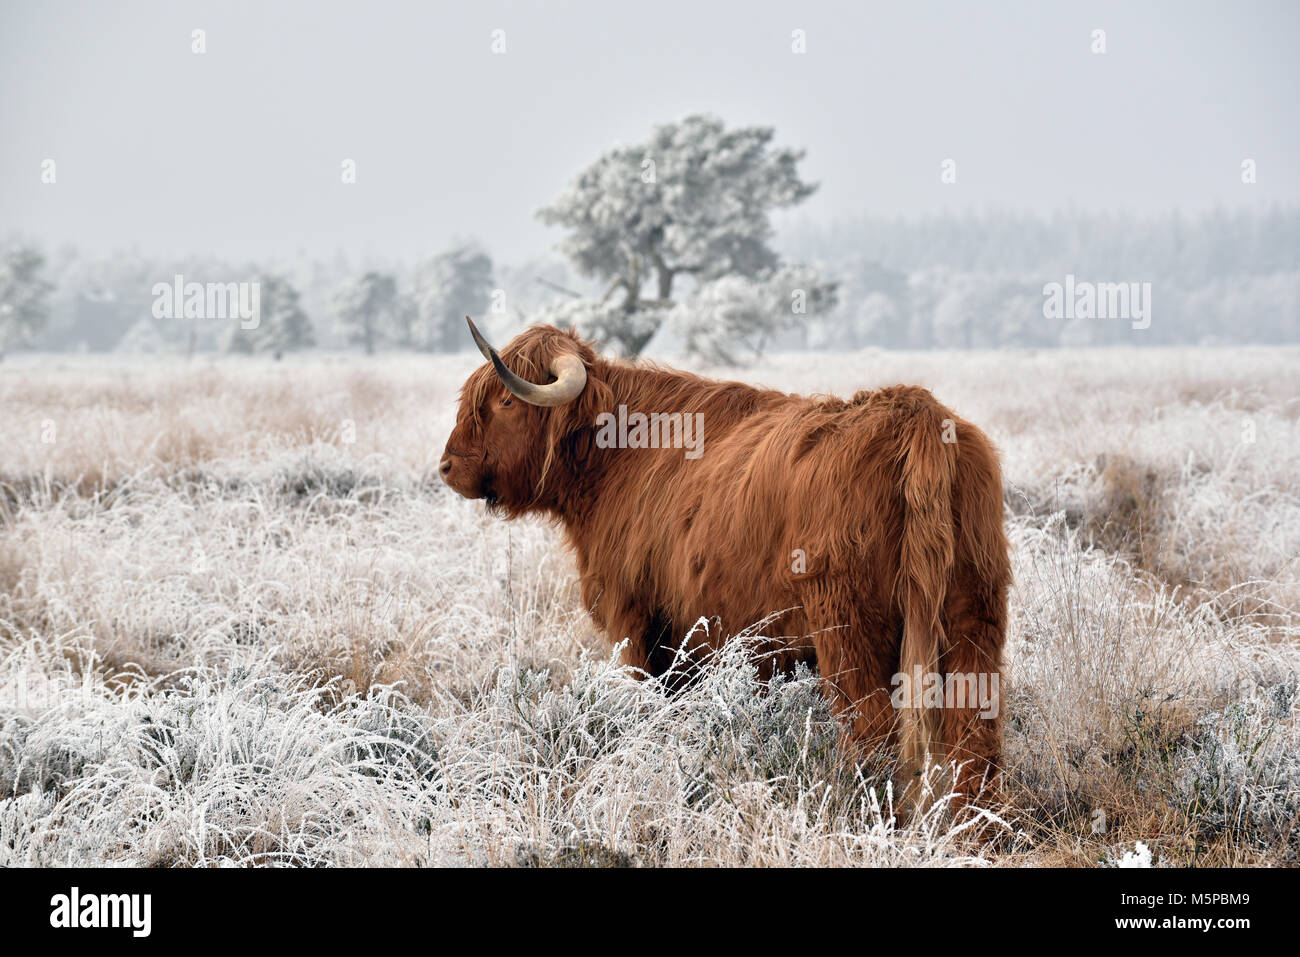 Scottish Highlander Cow in a natural winter landscape. Stock Photo